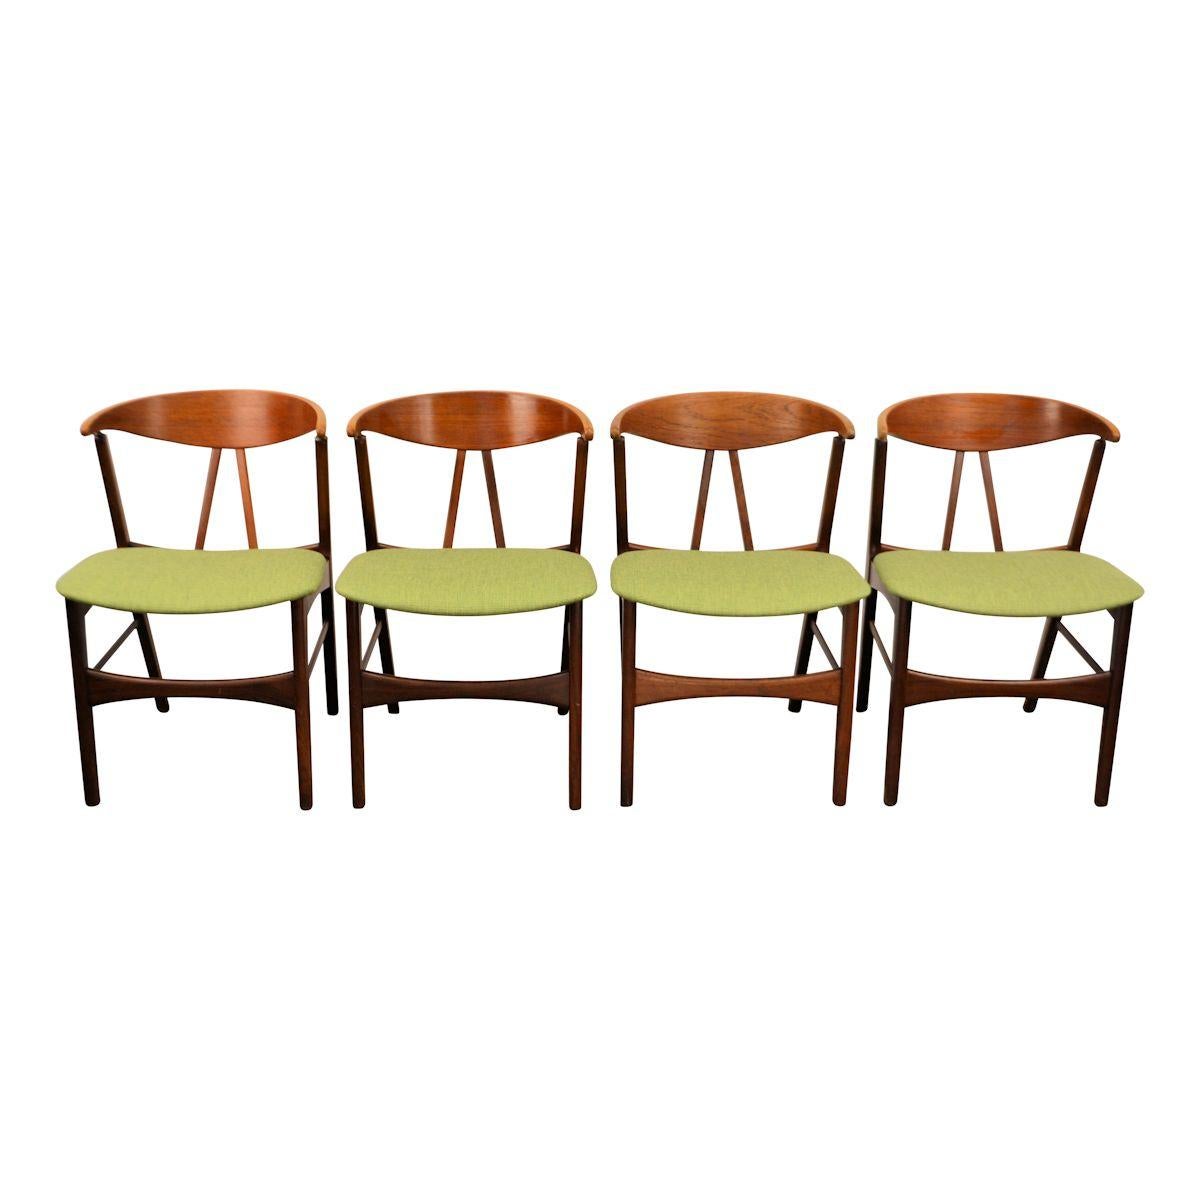 Mid-20th Century Vintage Danish Design Teak/Oak Dining Chairs, Set of 4